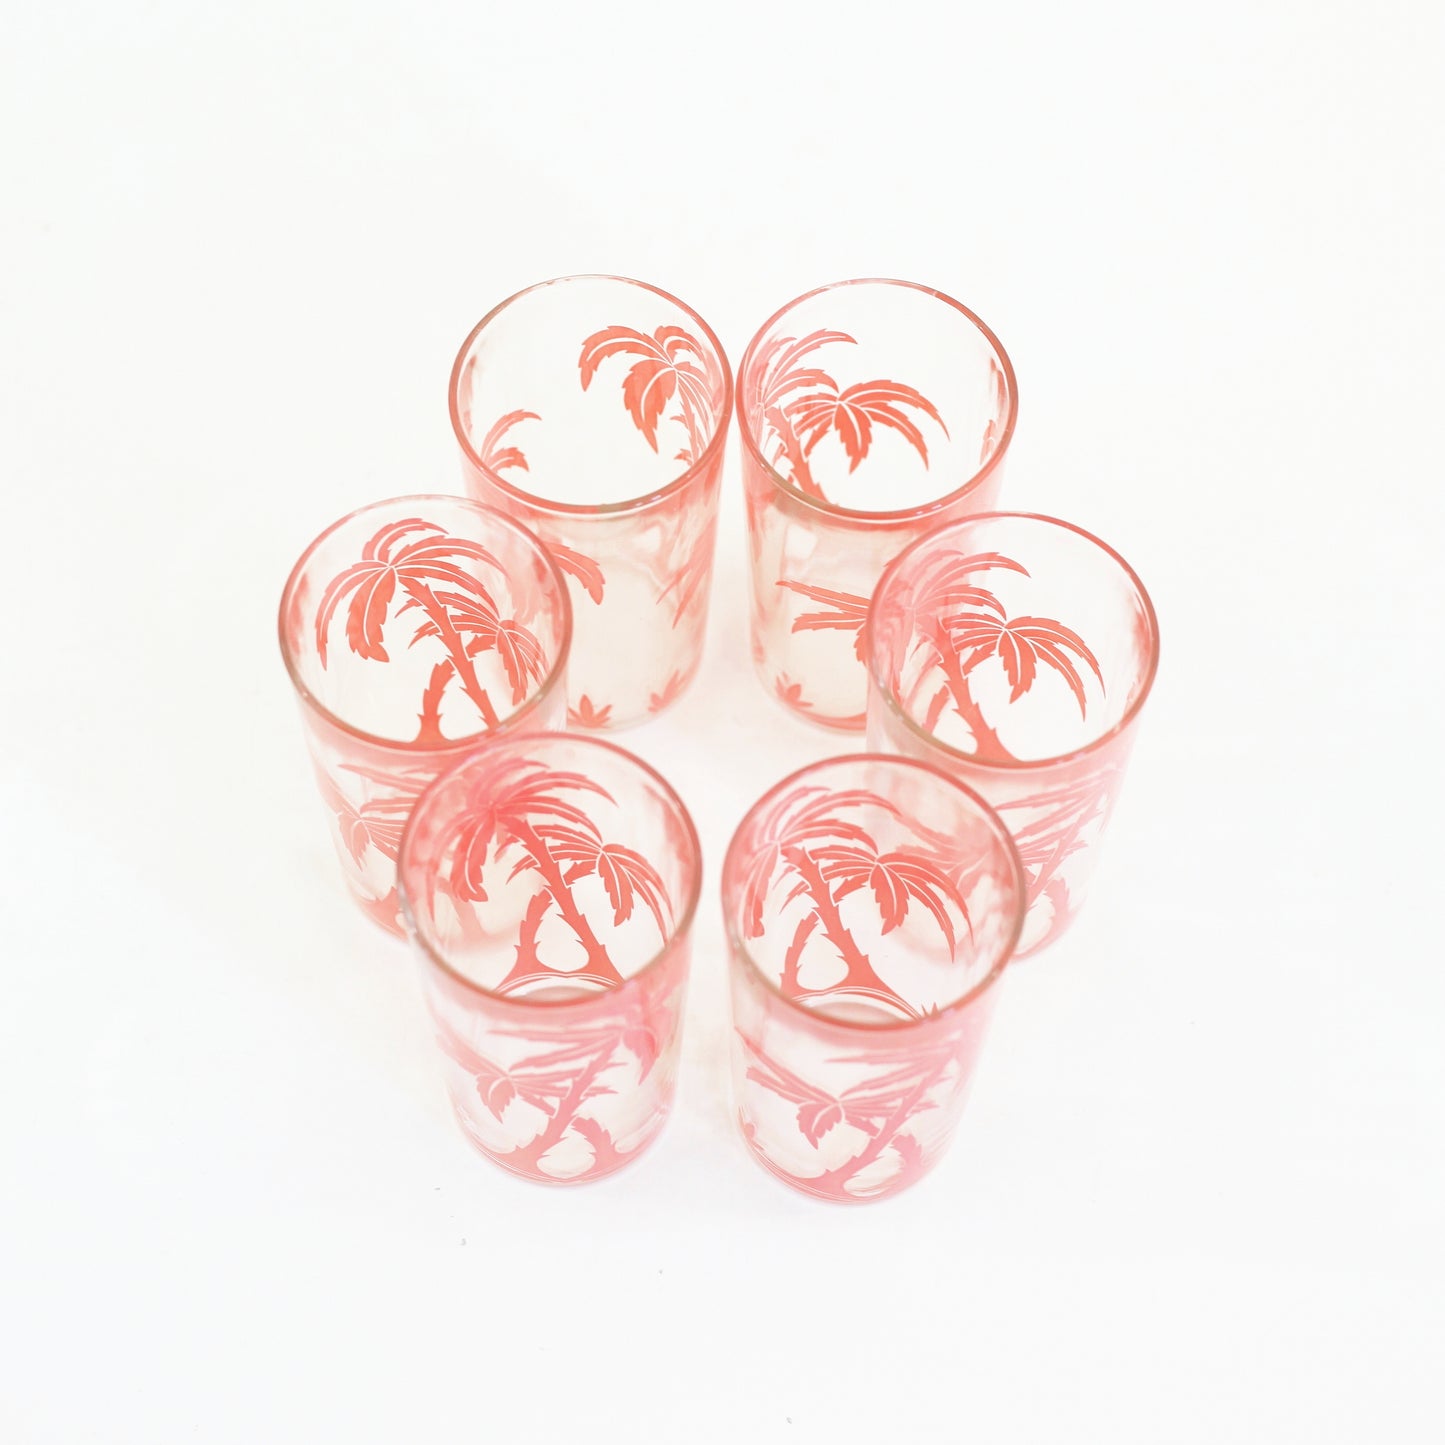 SOLD - Vintage Pink Palm Tree Glasses